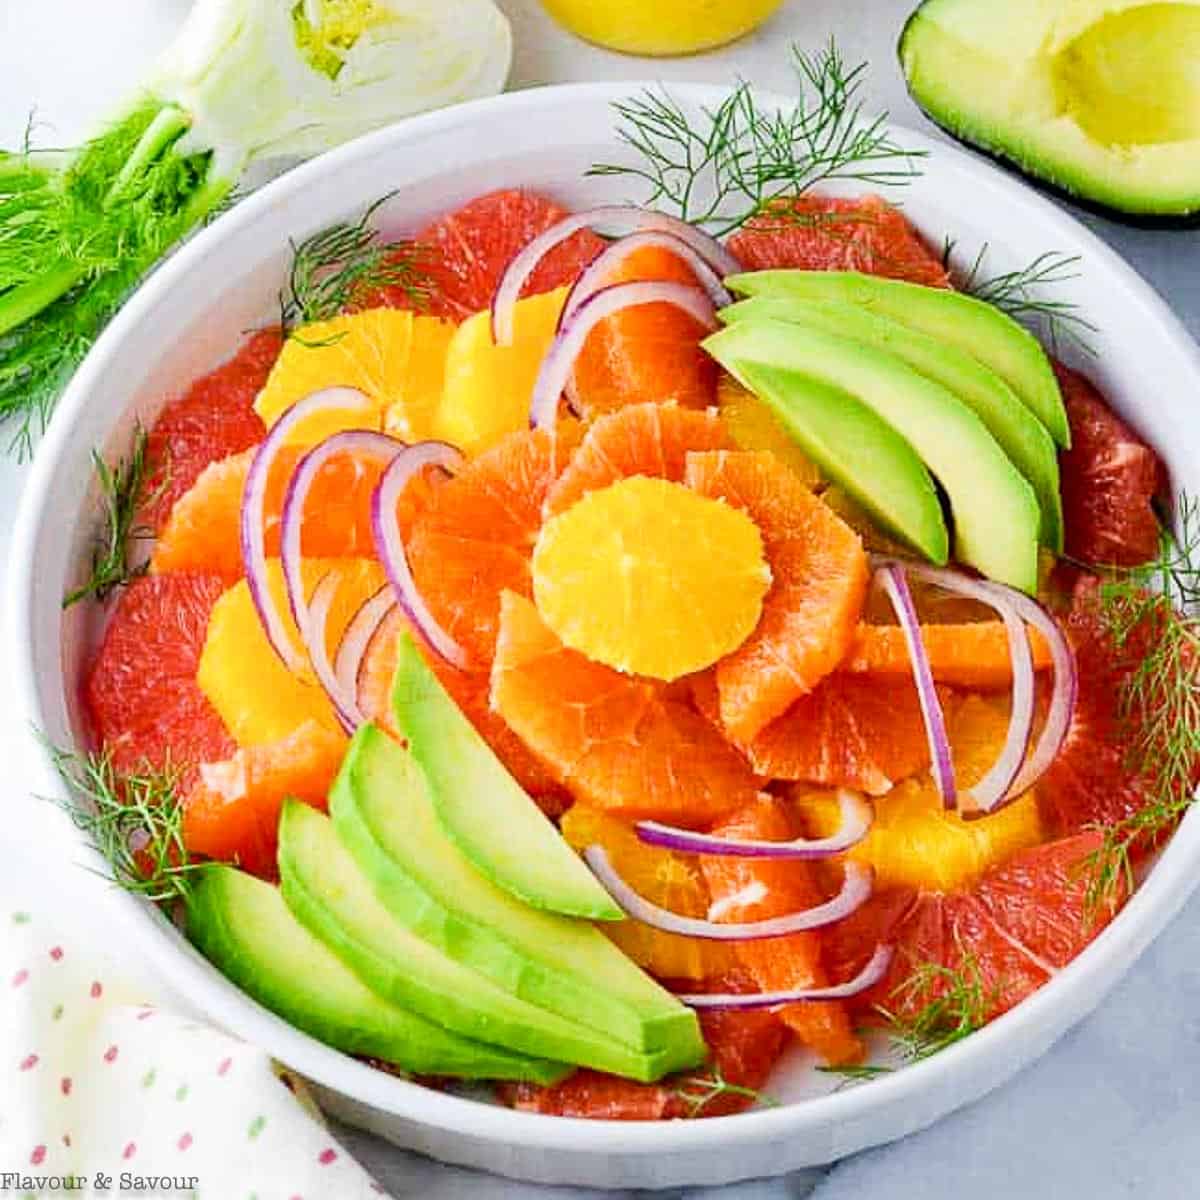 Grapefruit-Orange Avocado Salad with Fennel from https://www.flavourandsavour.com/